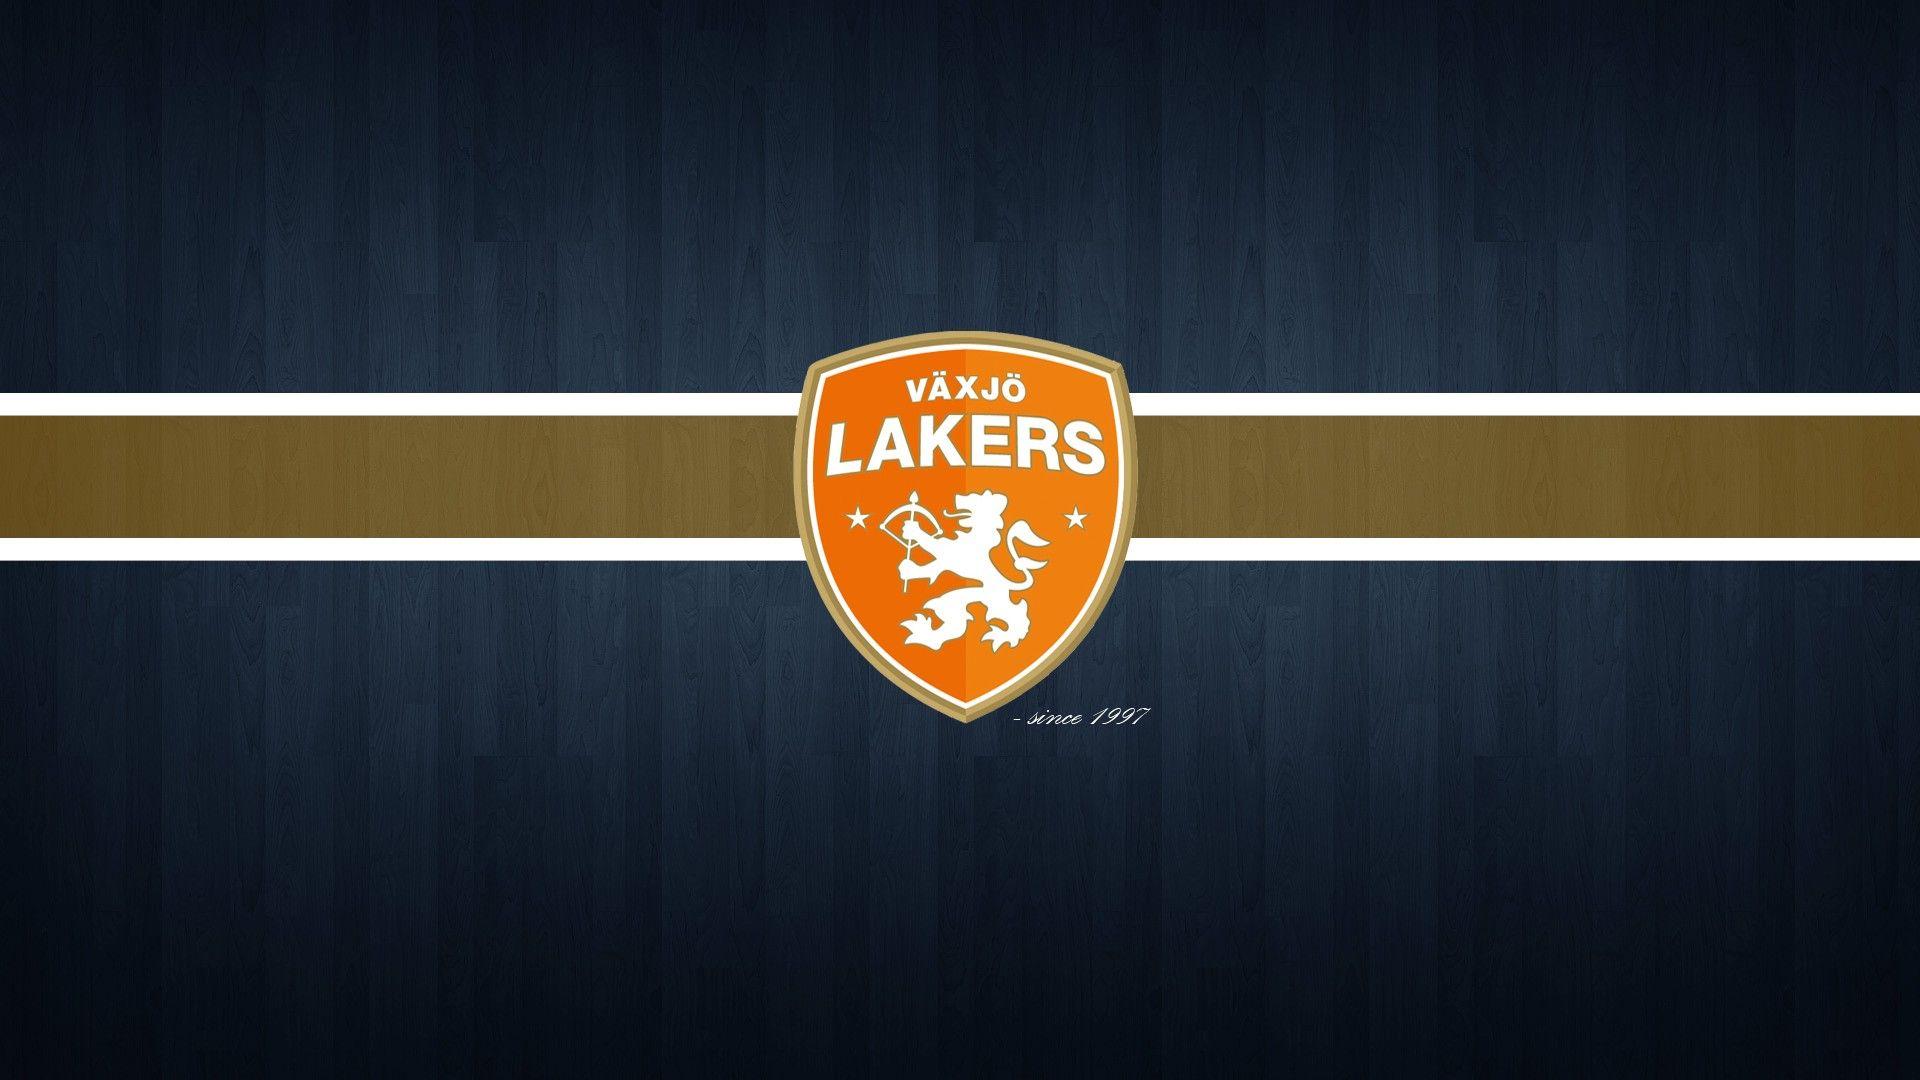 Los Angeles Lakers wallpaper HD background download deskx1080